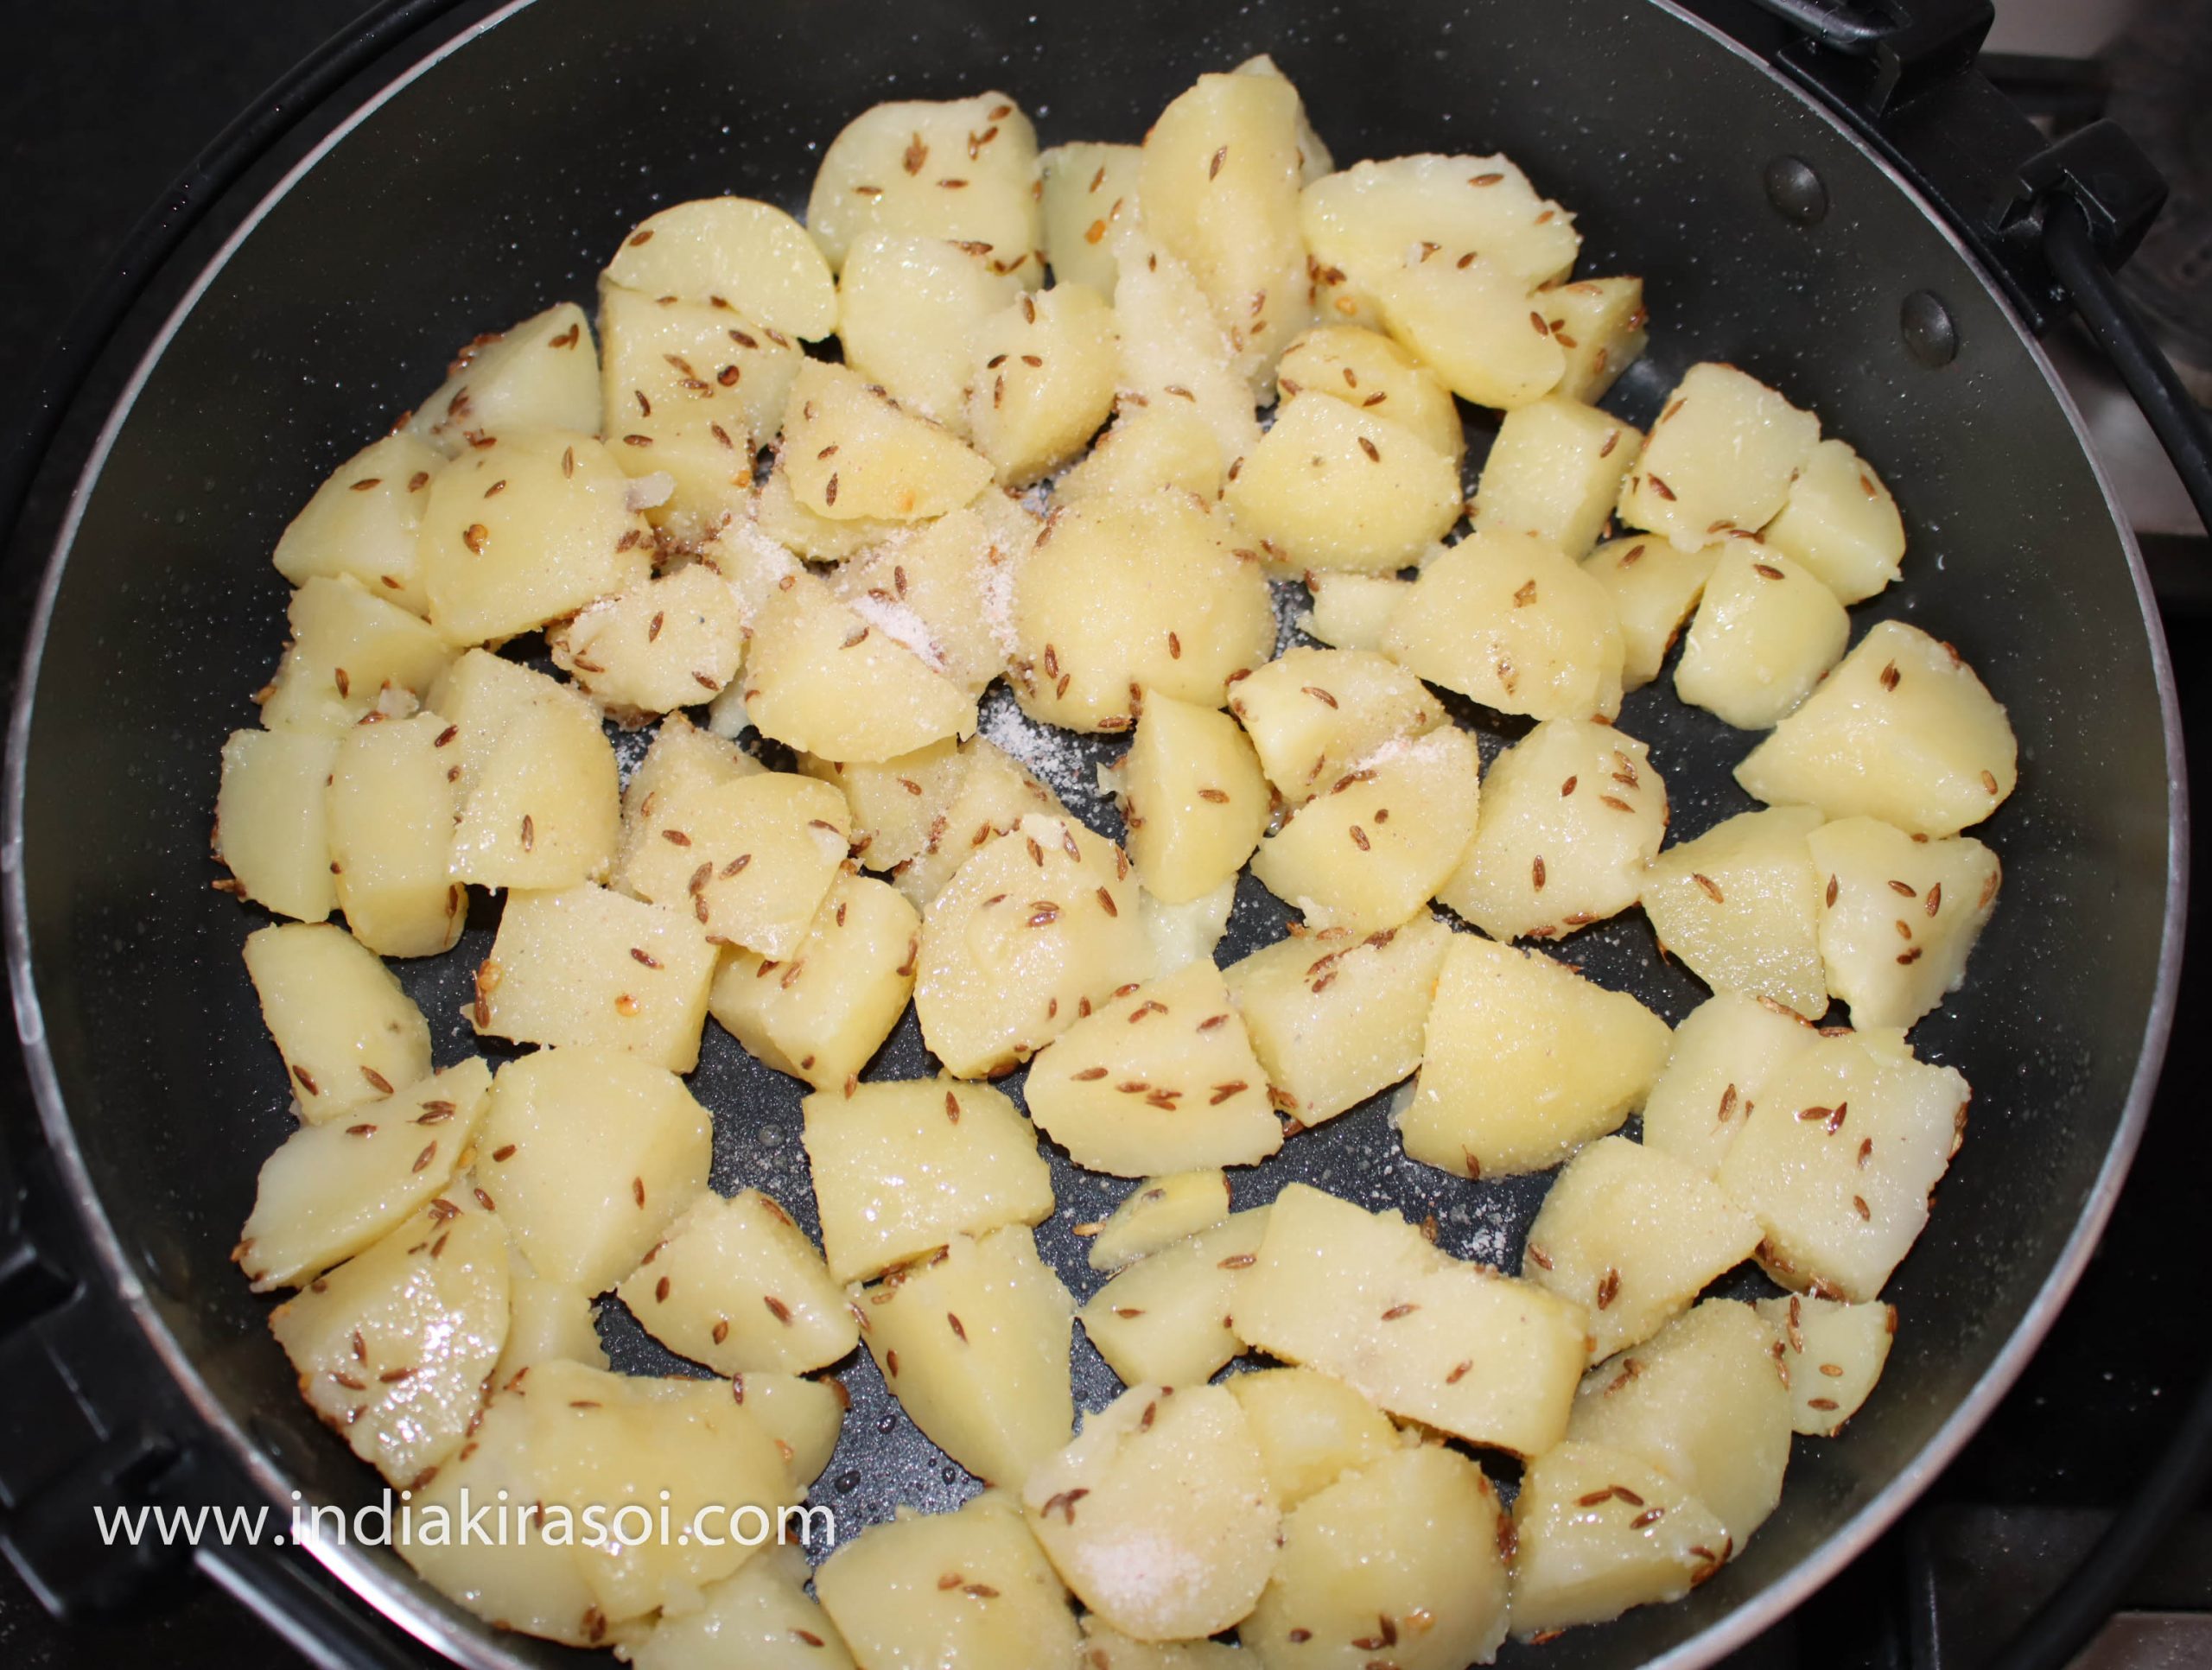 Add salt in the potato as per taste.